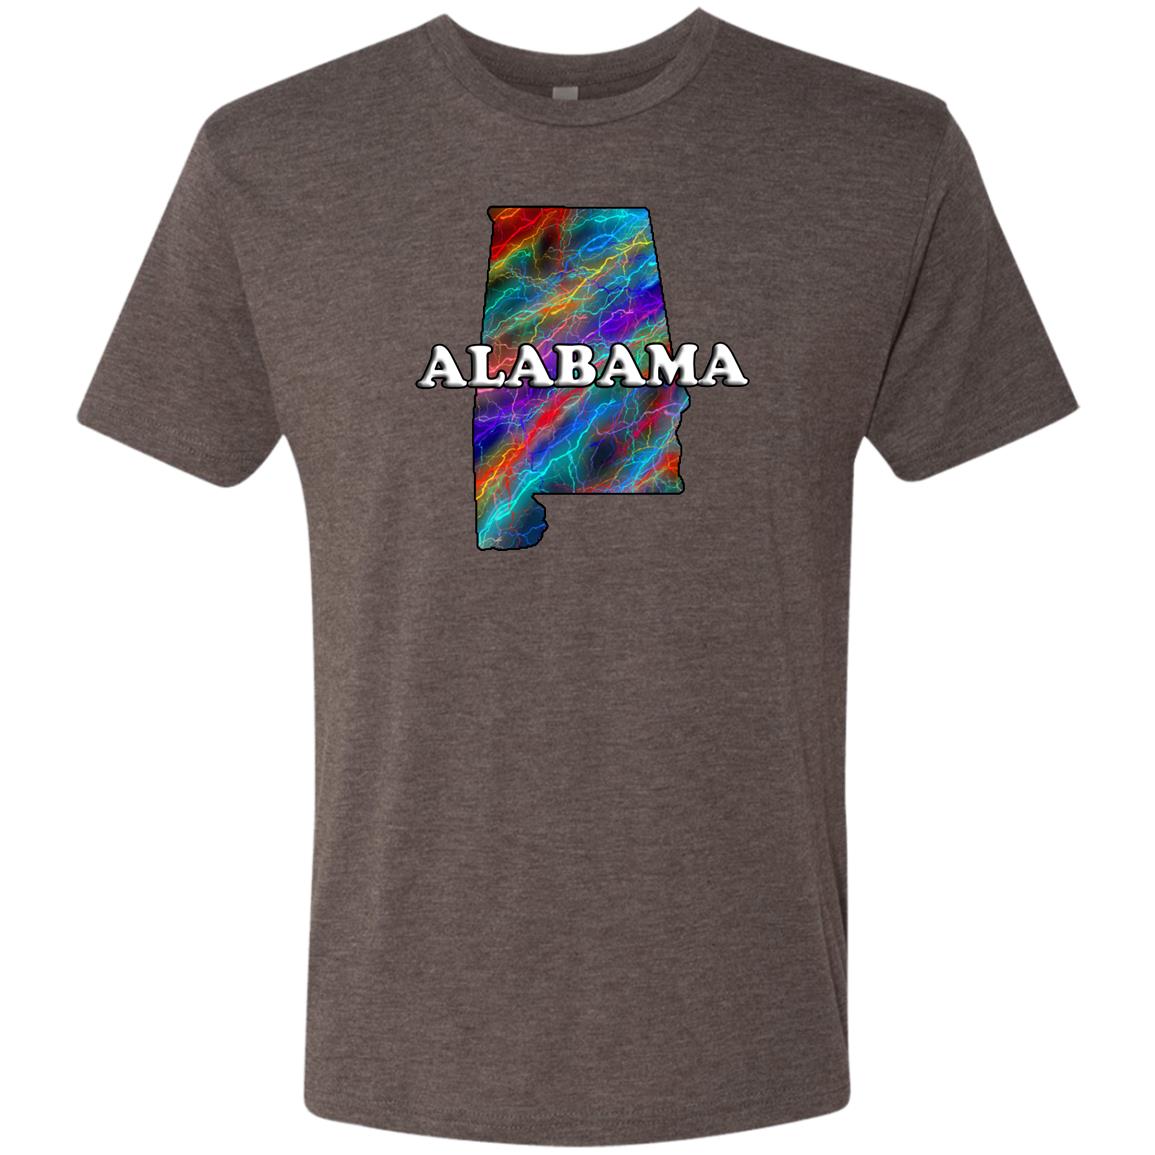 Alabama State T-Shirt